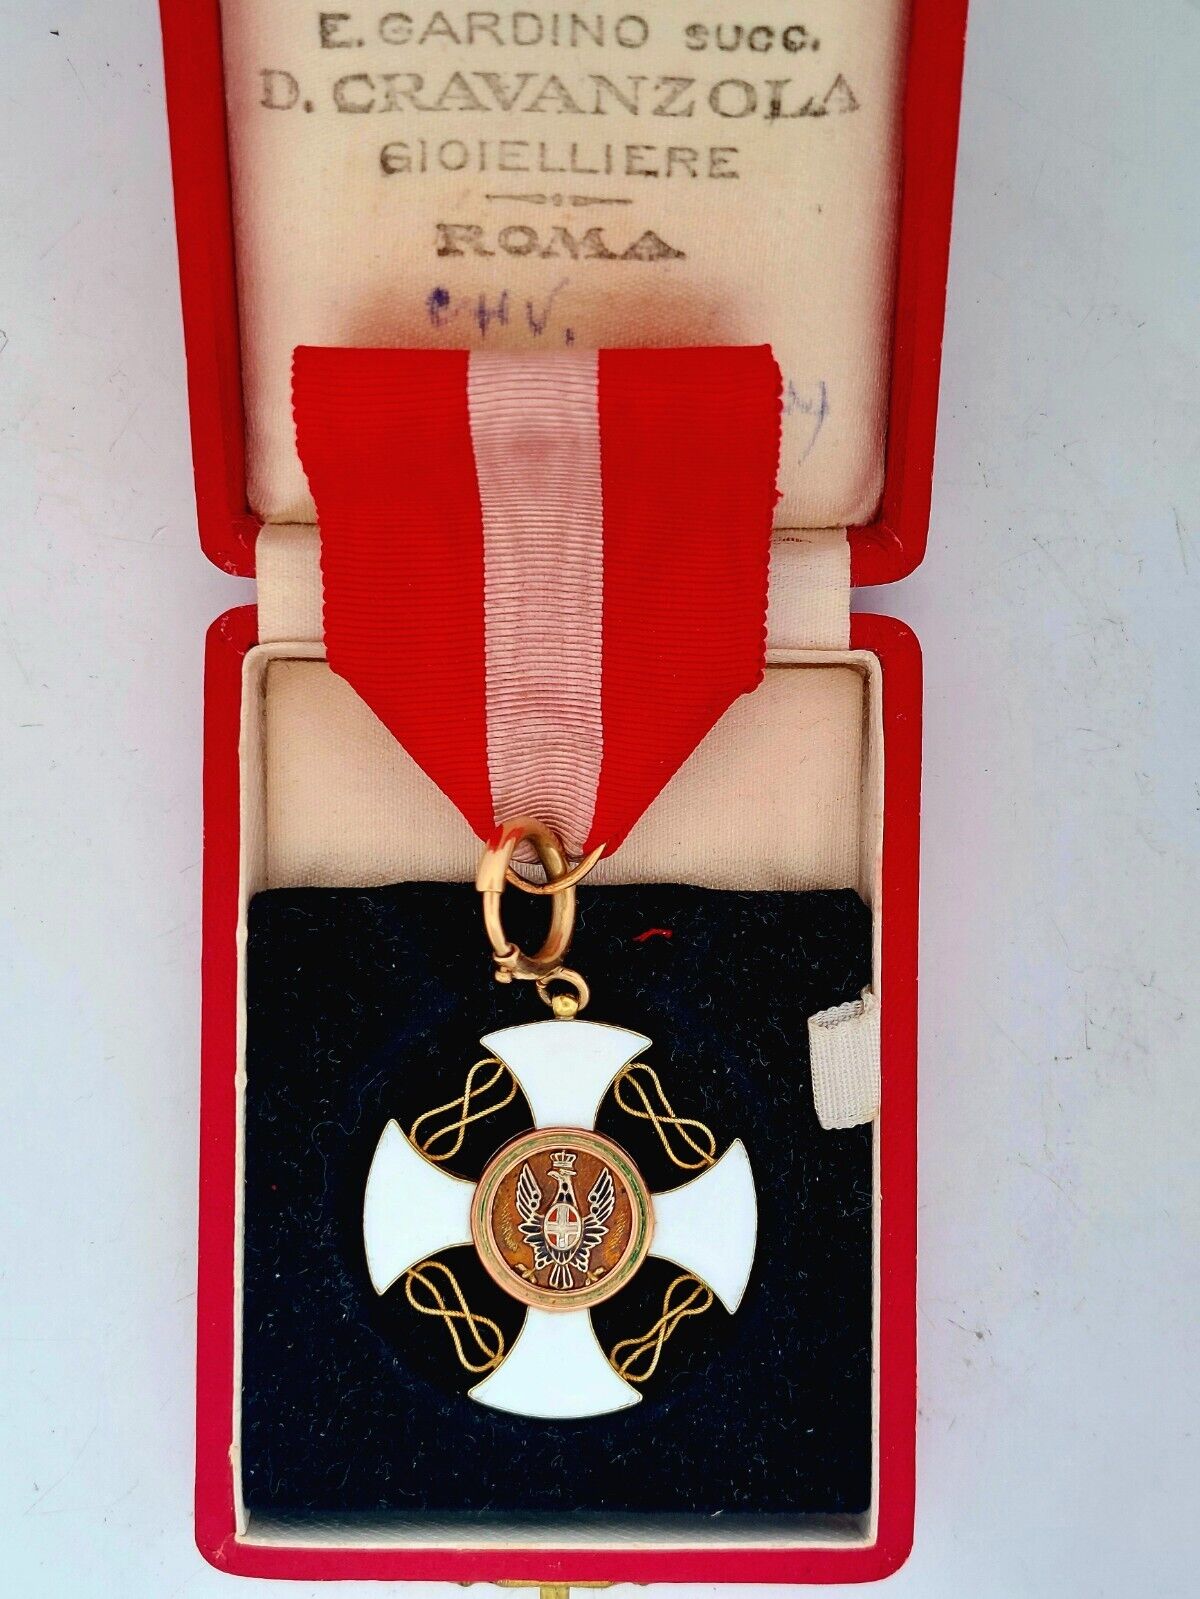 c.1932 Order of the Crown of Italy Enamel Award Medal - Original Box